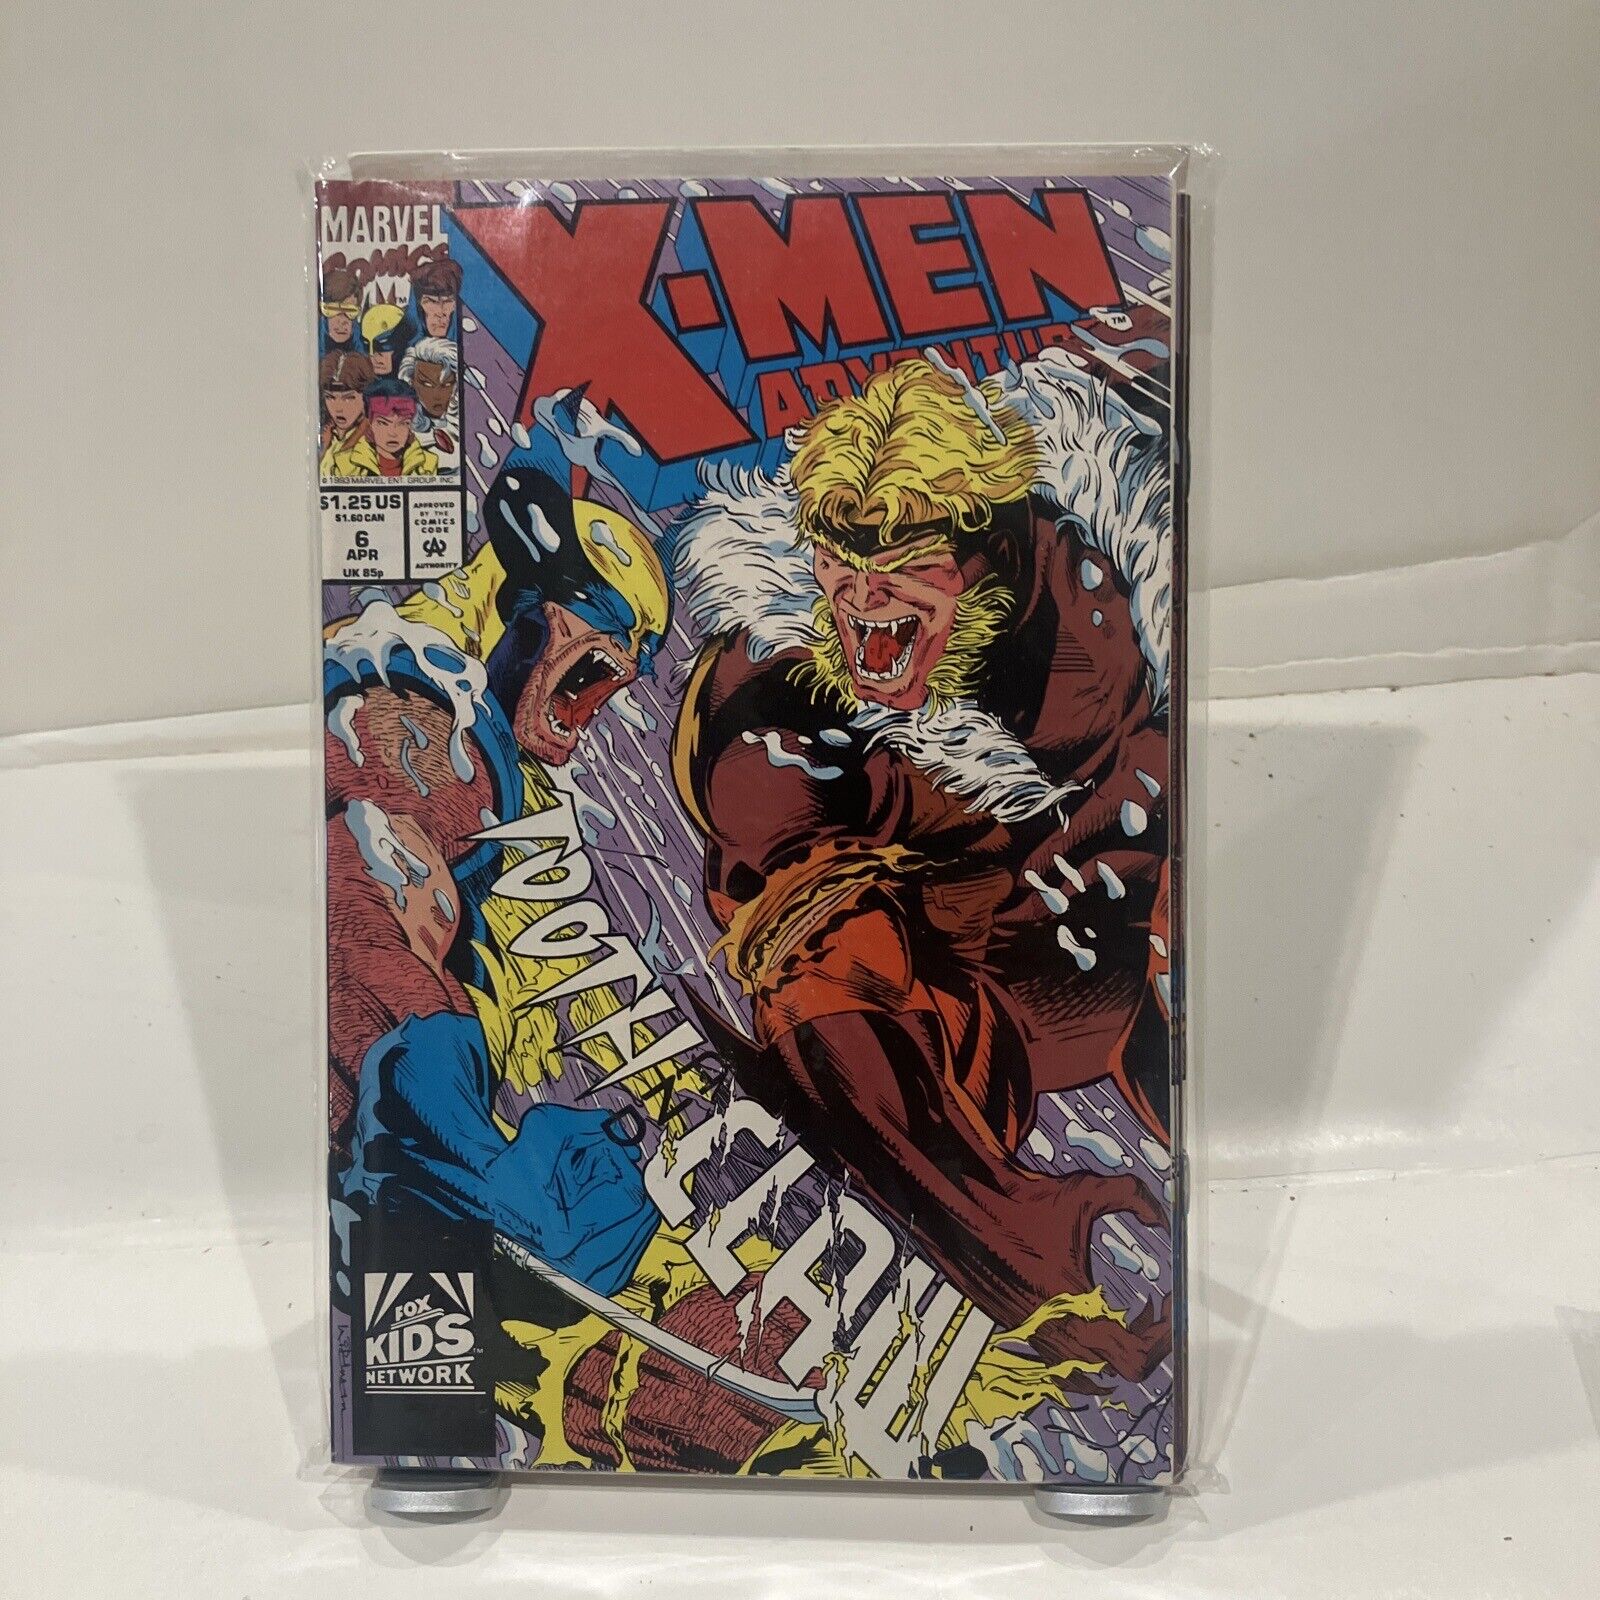 X-Men Adventures #6 Comic Book - Marvel Comics